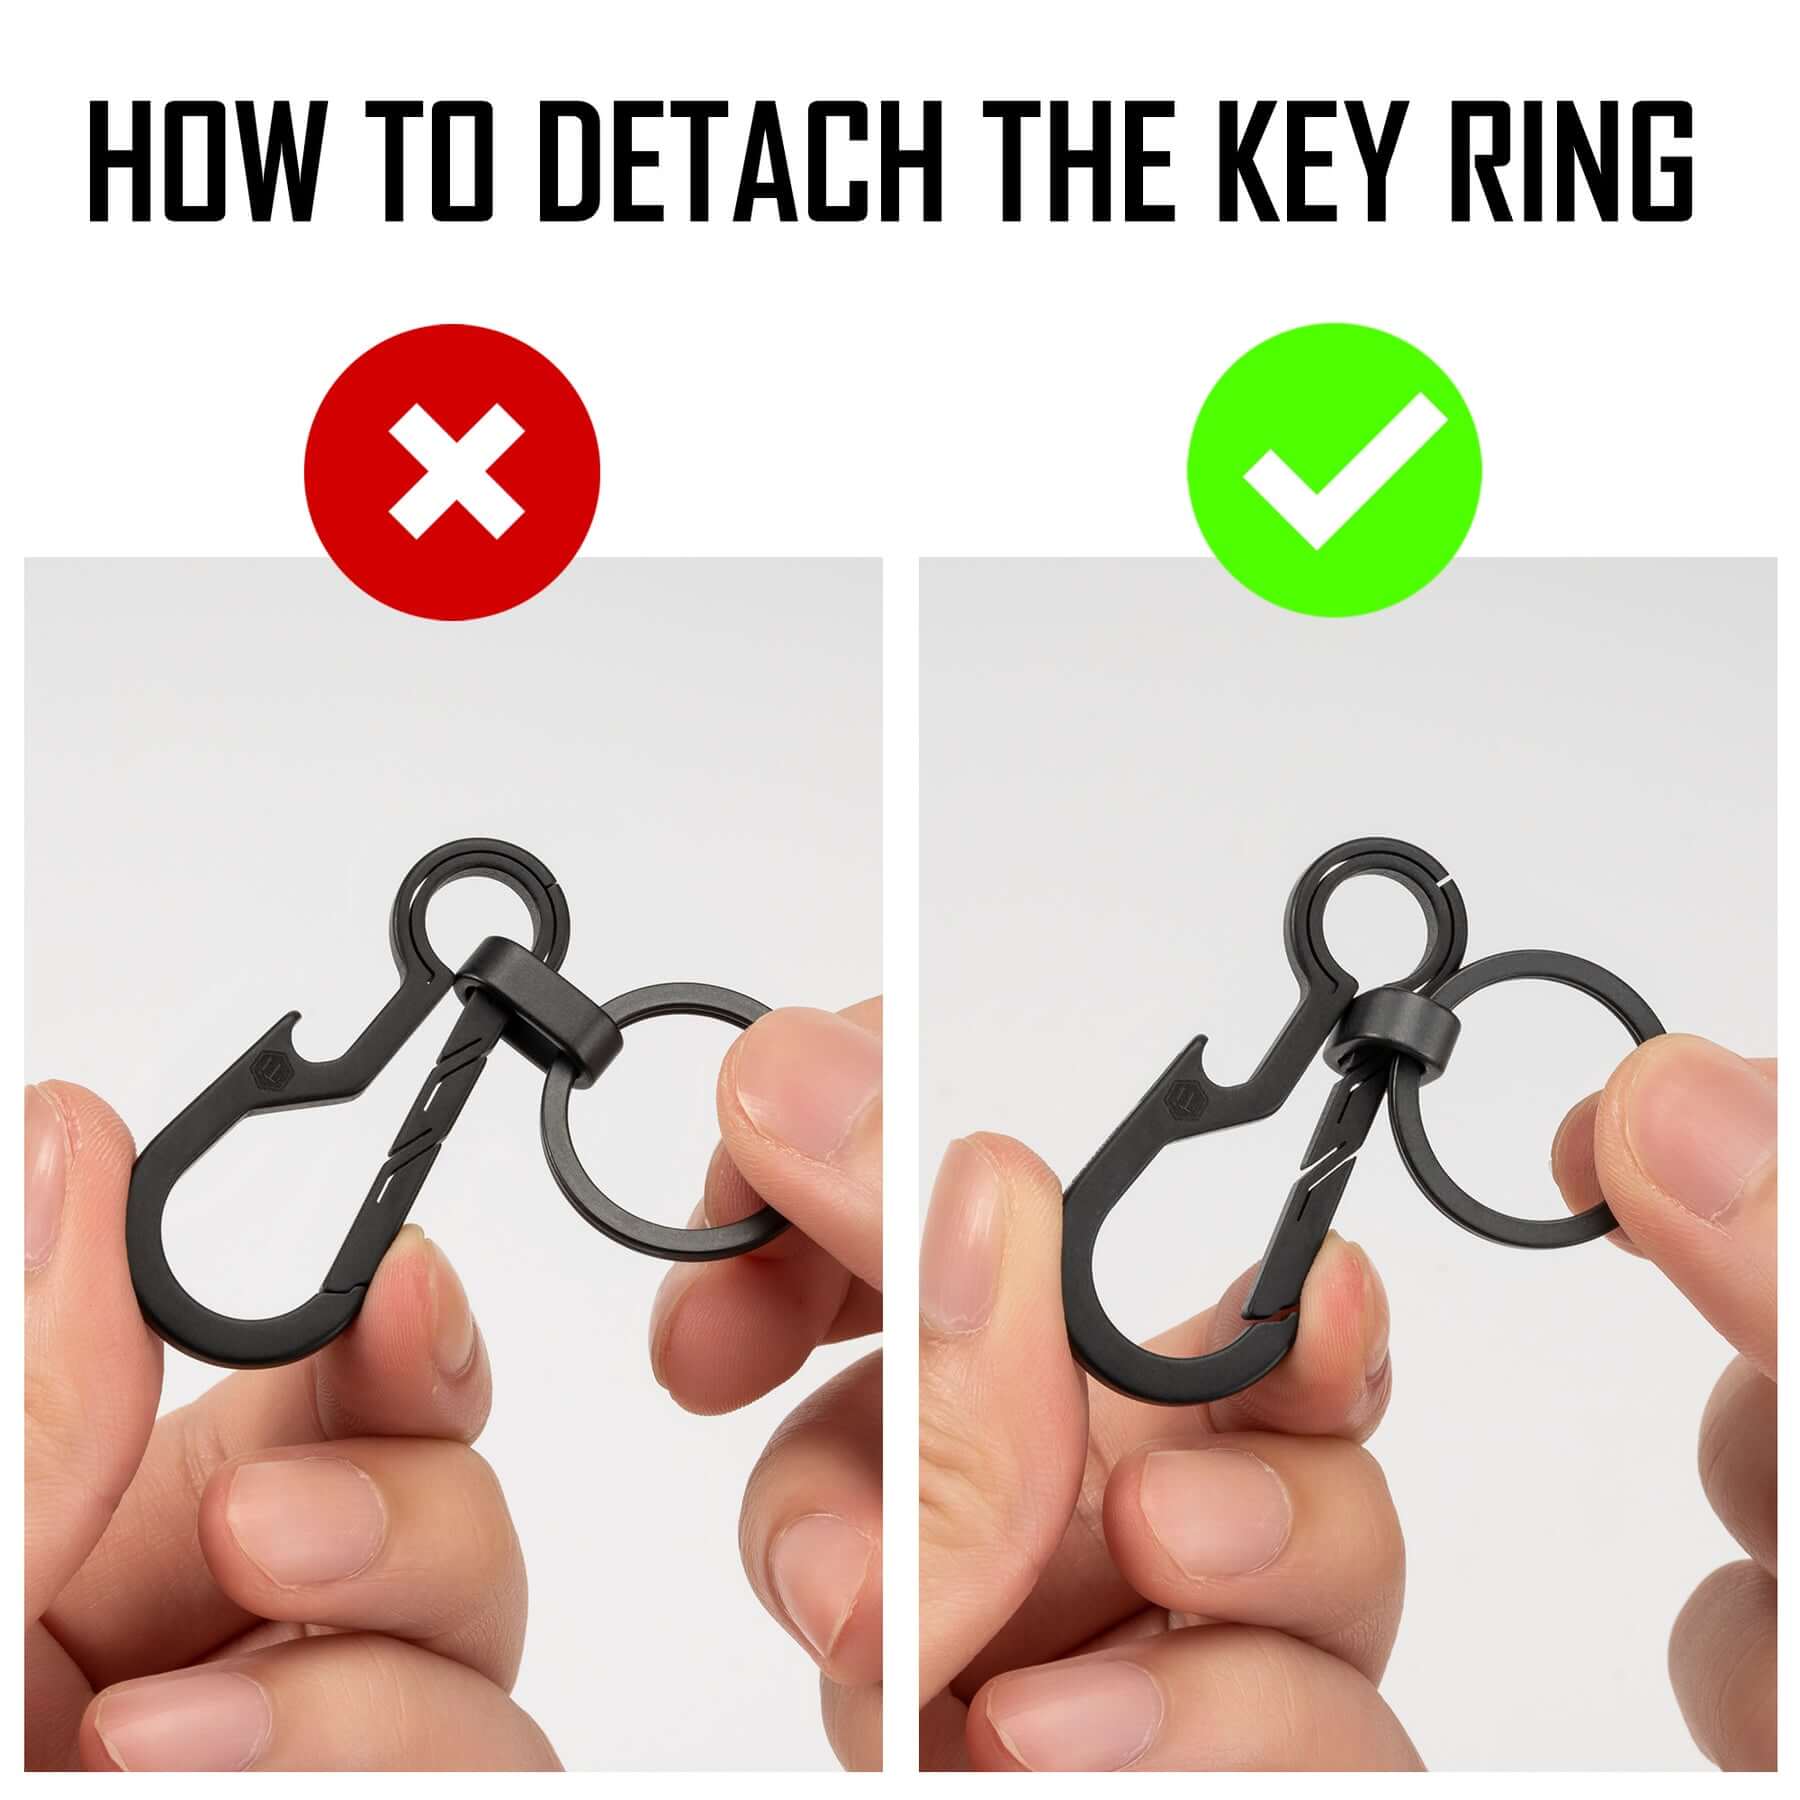 KM01 Titanium Alloy Keychain Clip with Bottle Opener （Black）